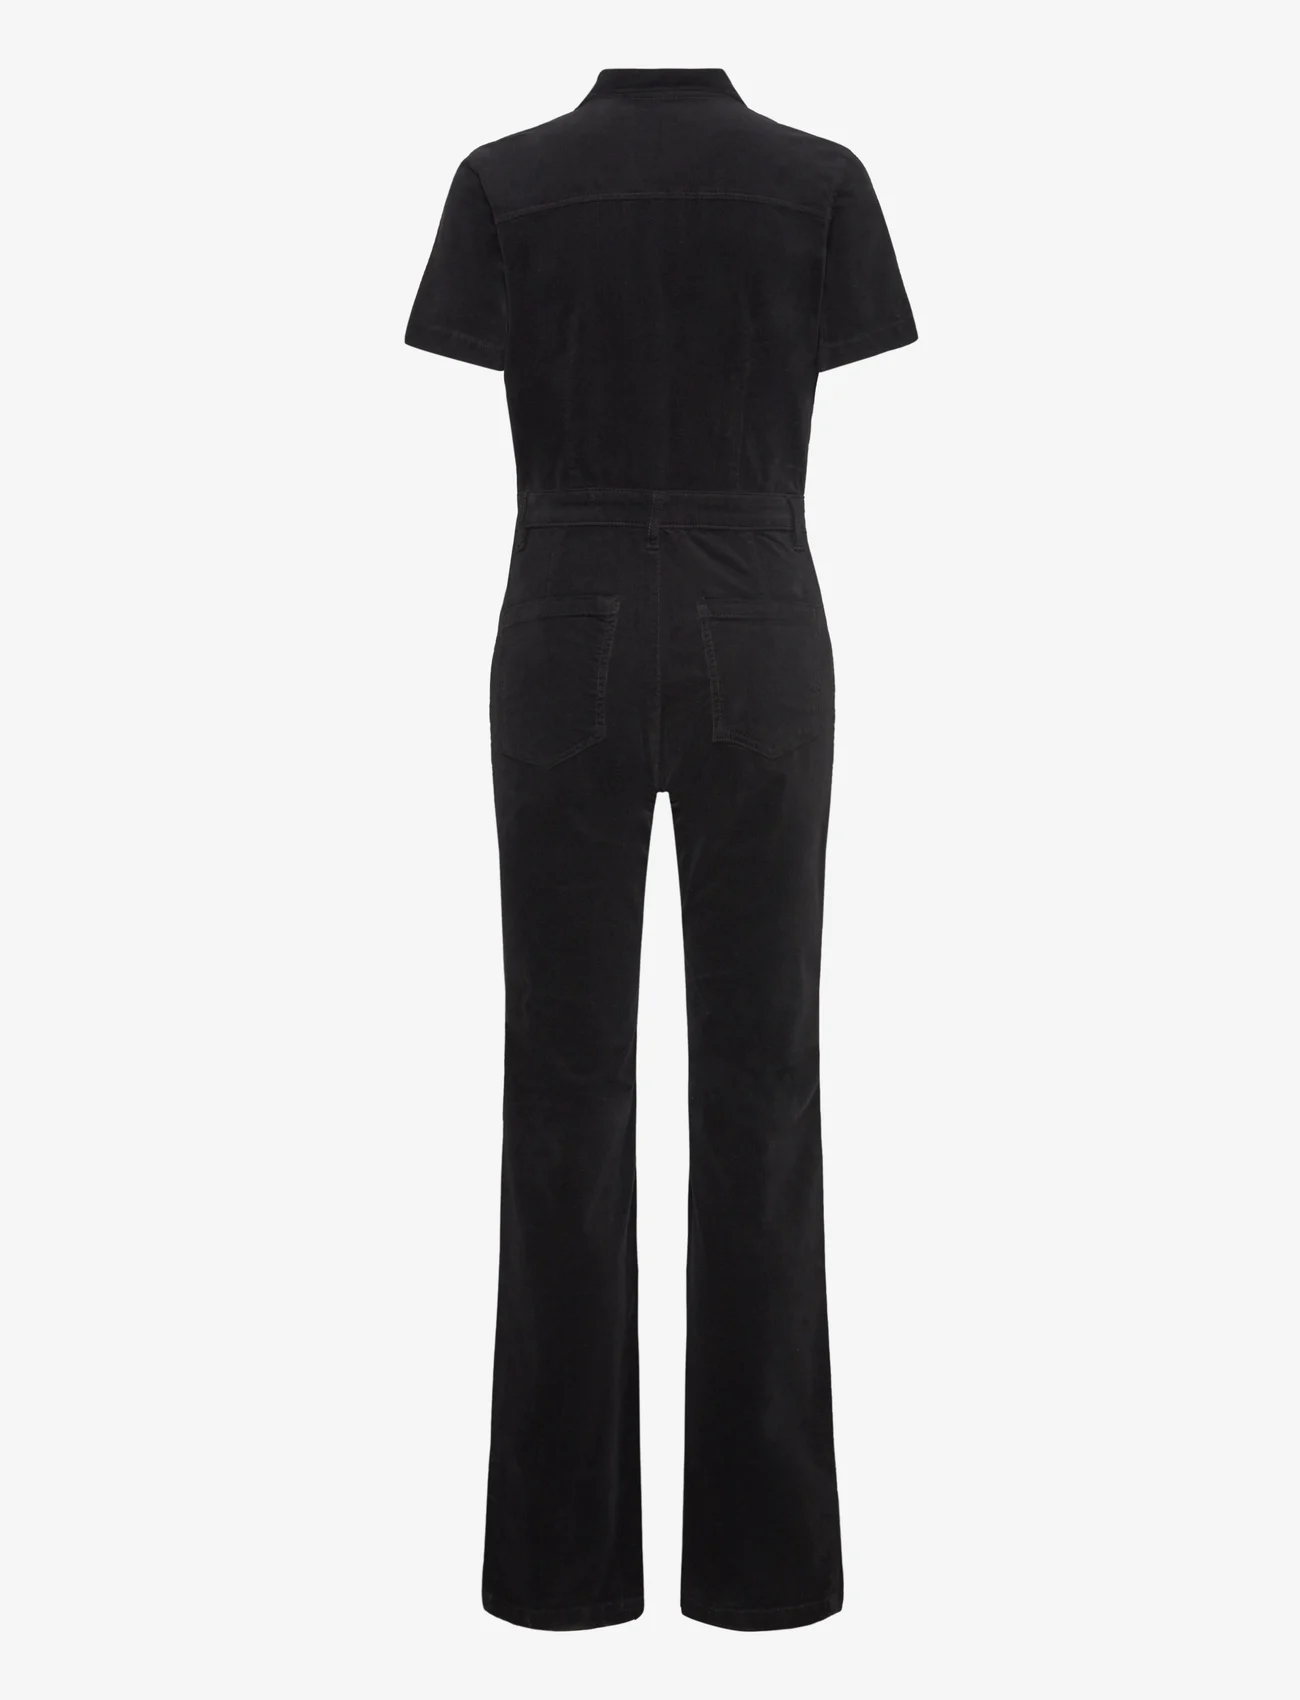 Mango - Corduroy jumpsuit with zip - kvinder - black - 1